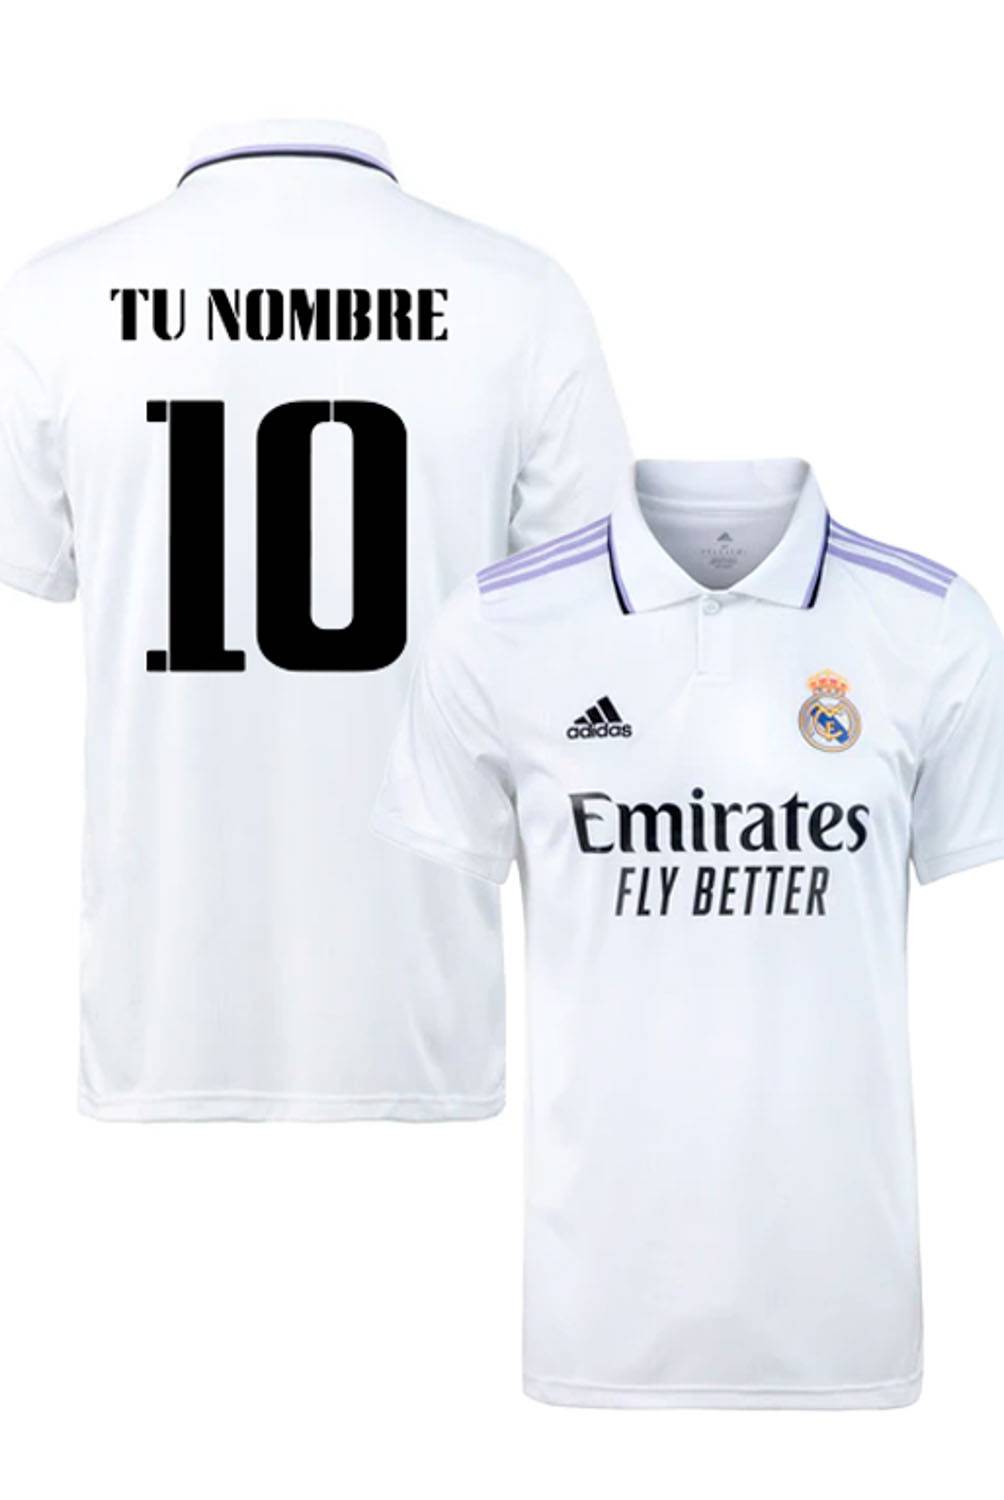 ADIDAS - Camiseta De Fútbol Personificable Real Madrid Local Hombre Adidas